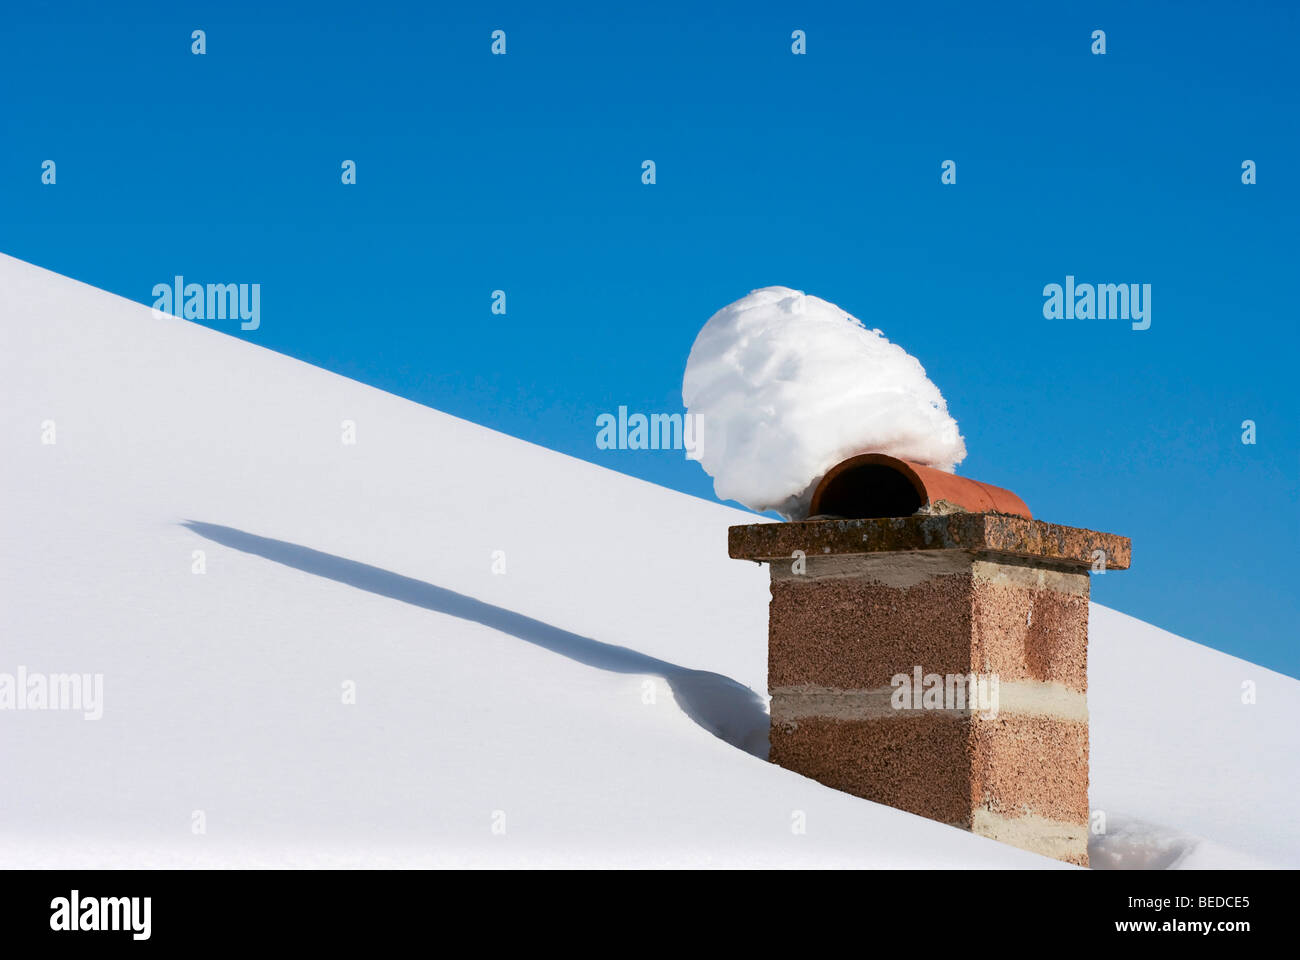 Snow on a brick chimney under a blue sky, Graubuenden, Switzerland, Europe Stock Photo